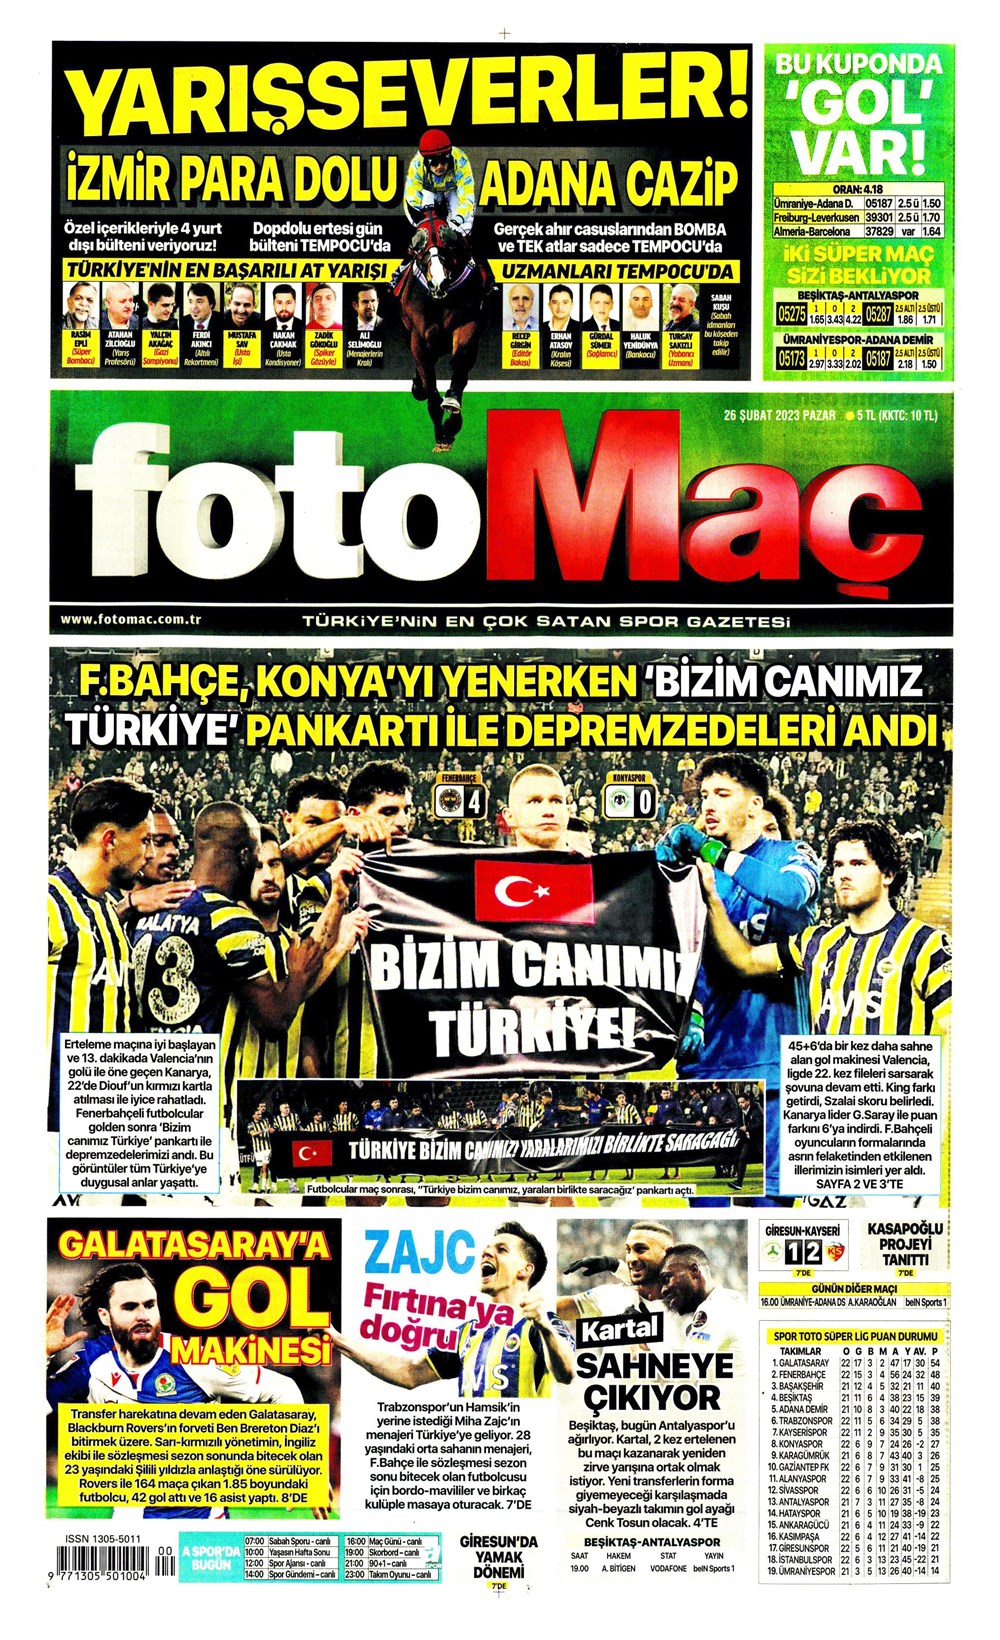 "Valenci'ağa' böyle istedi" - Sporun manşetleri  - 10. Foto